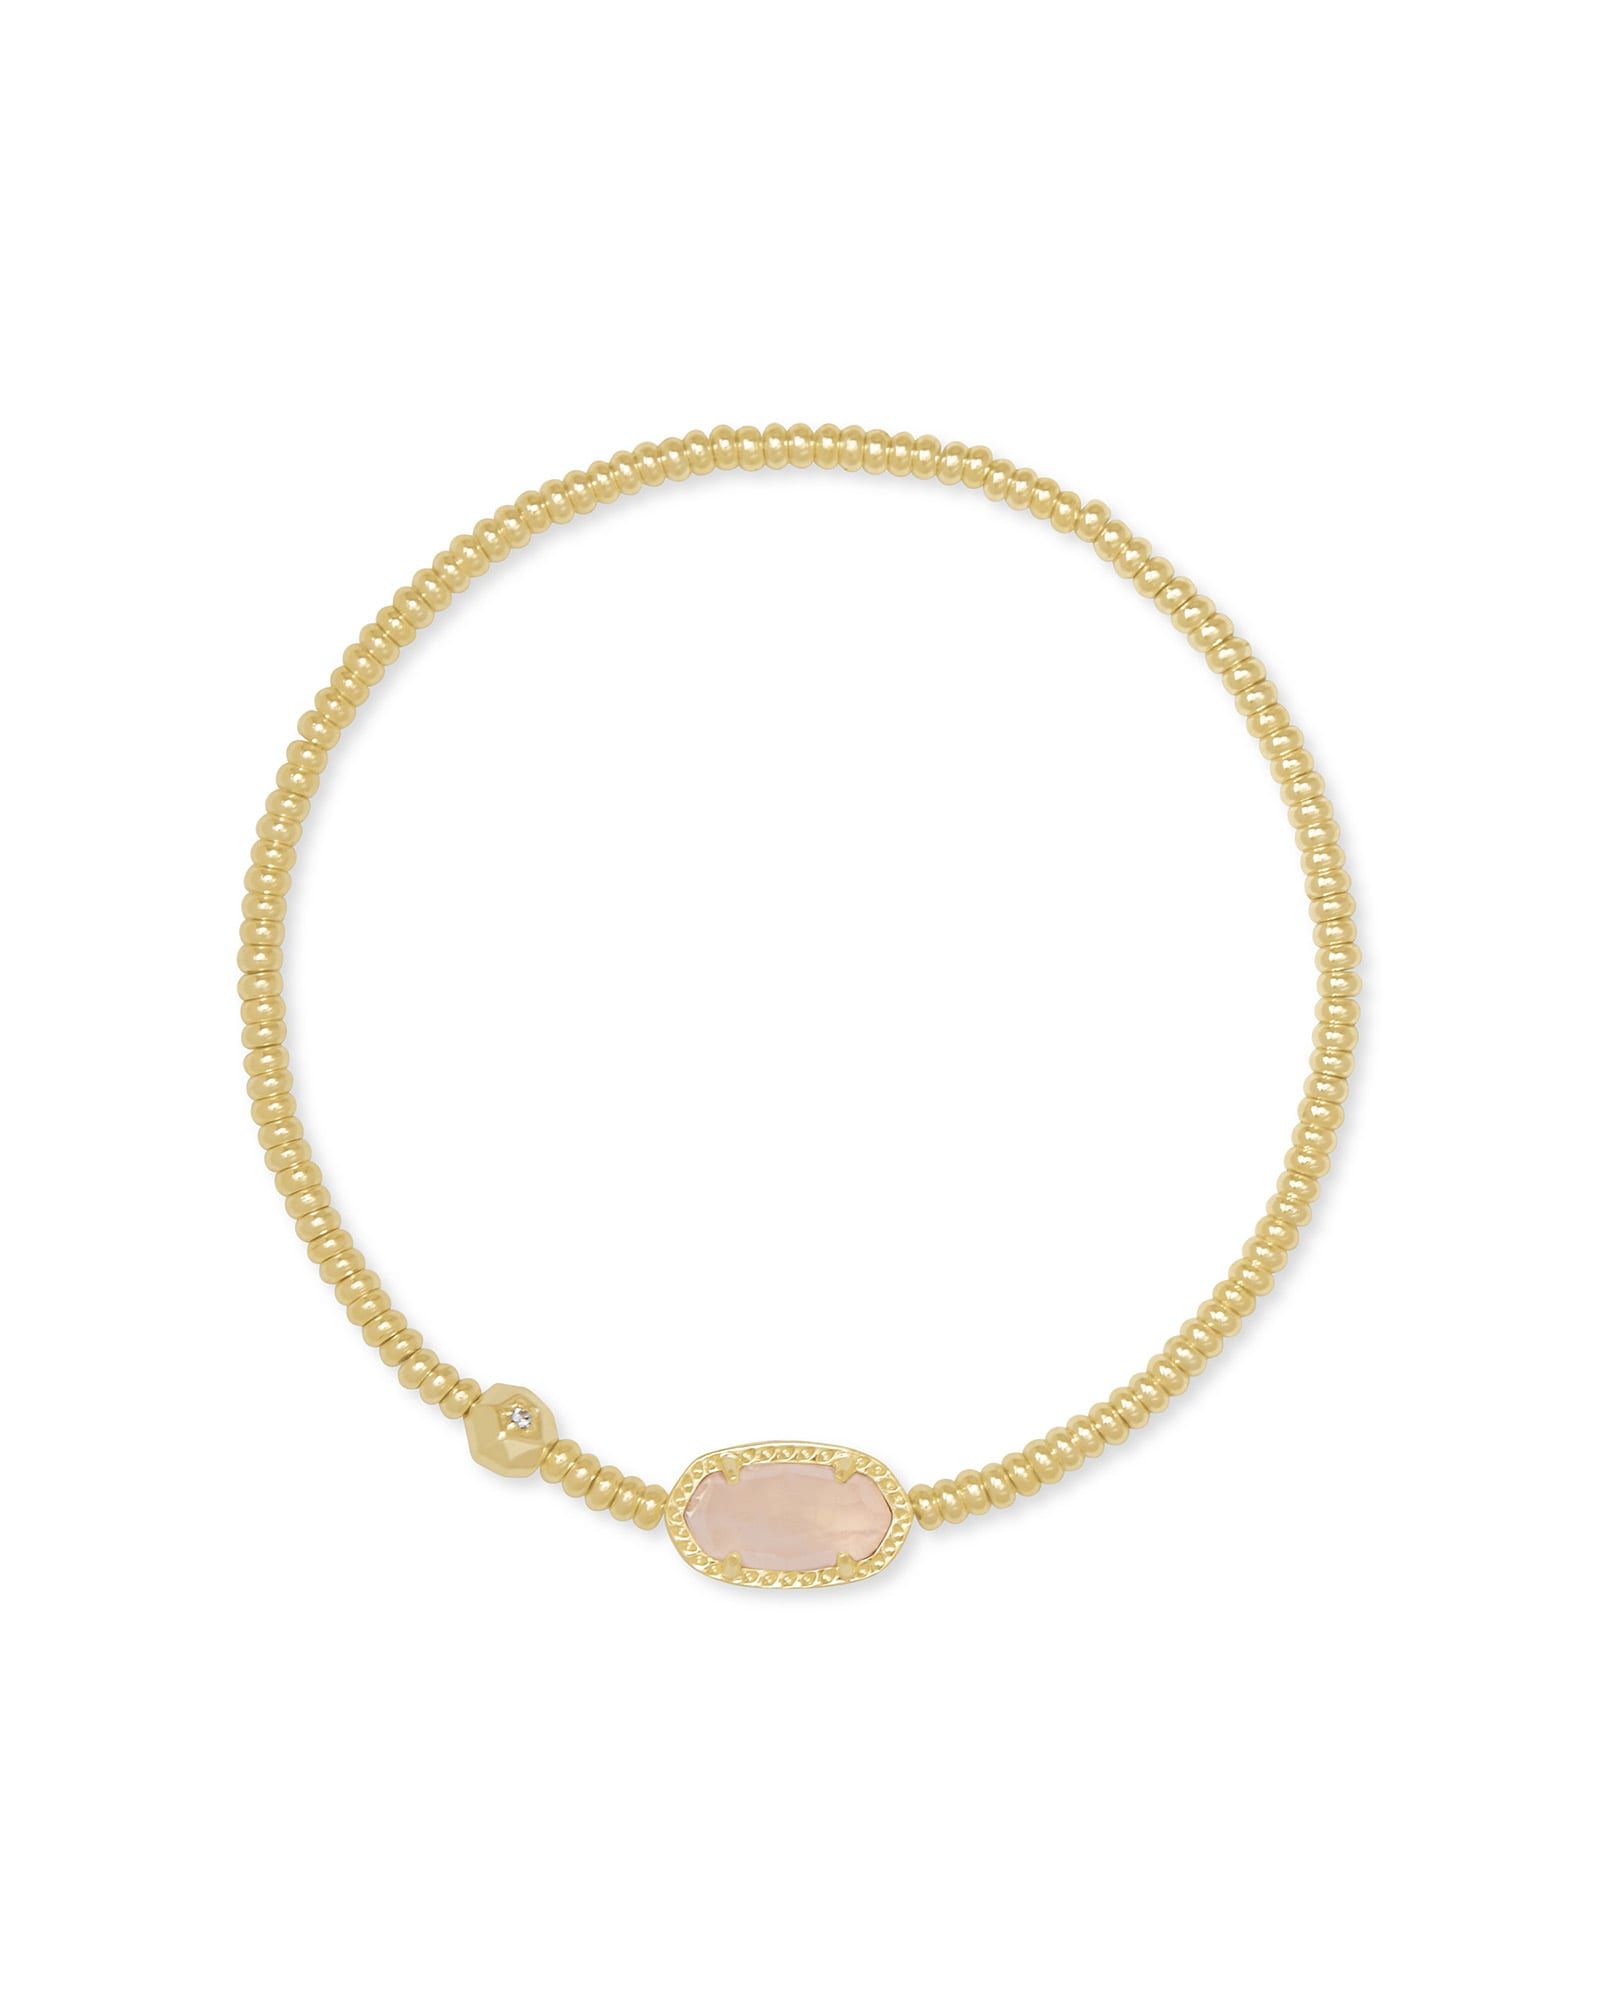 Kendra Scott Grayson Gold Stretch Bracelet in Rose | Quartz | Kendra Scott